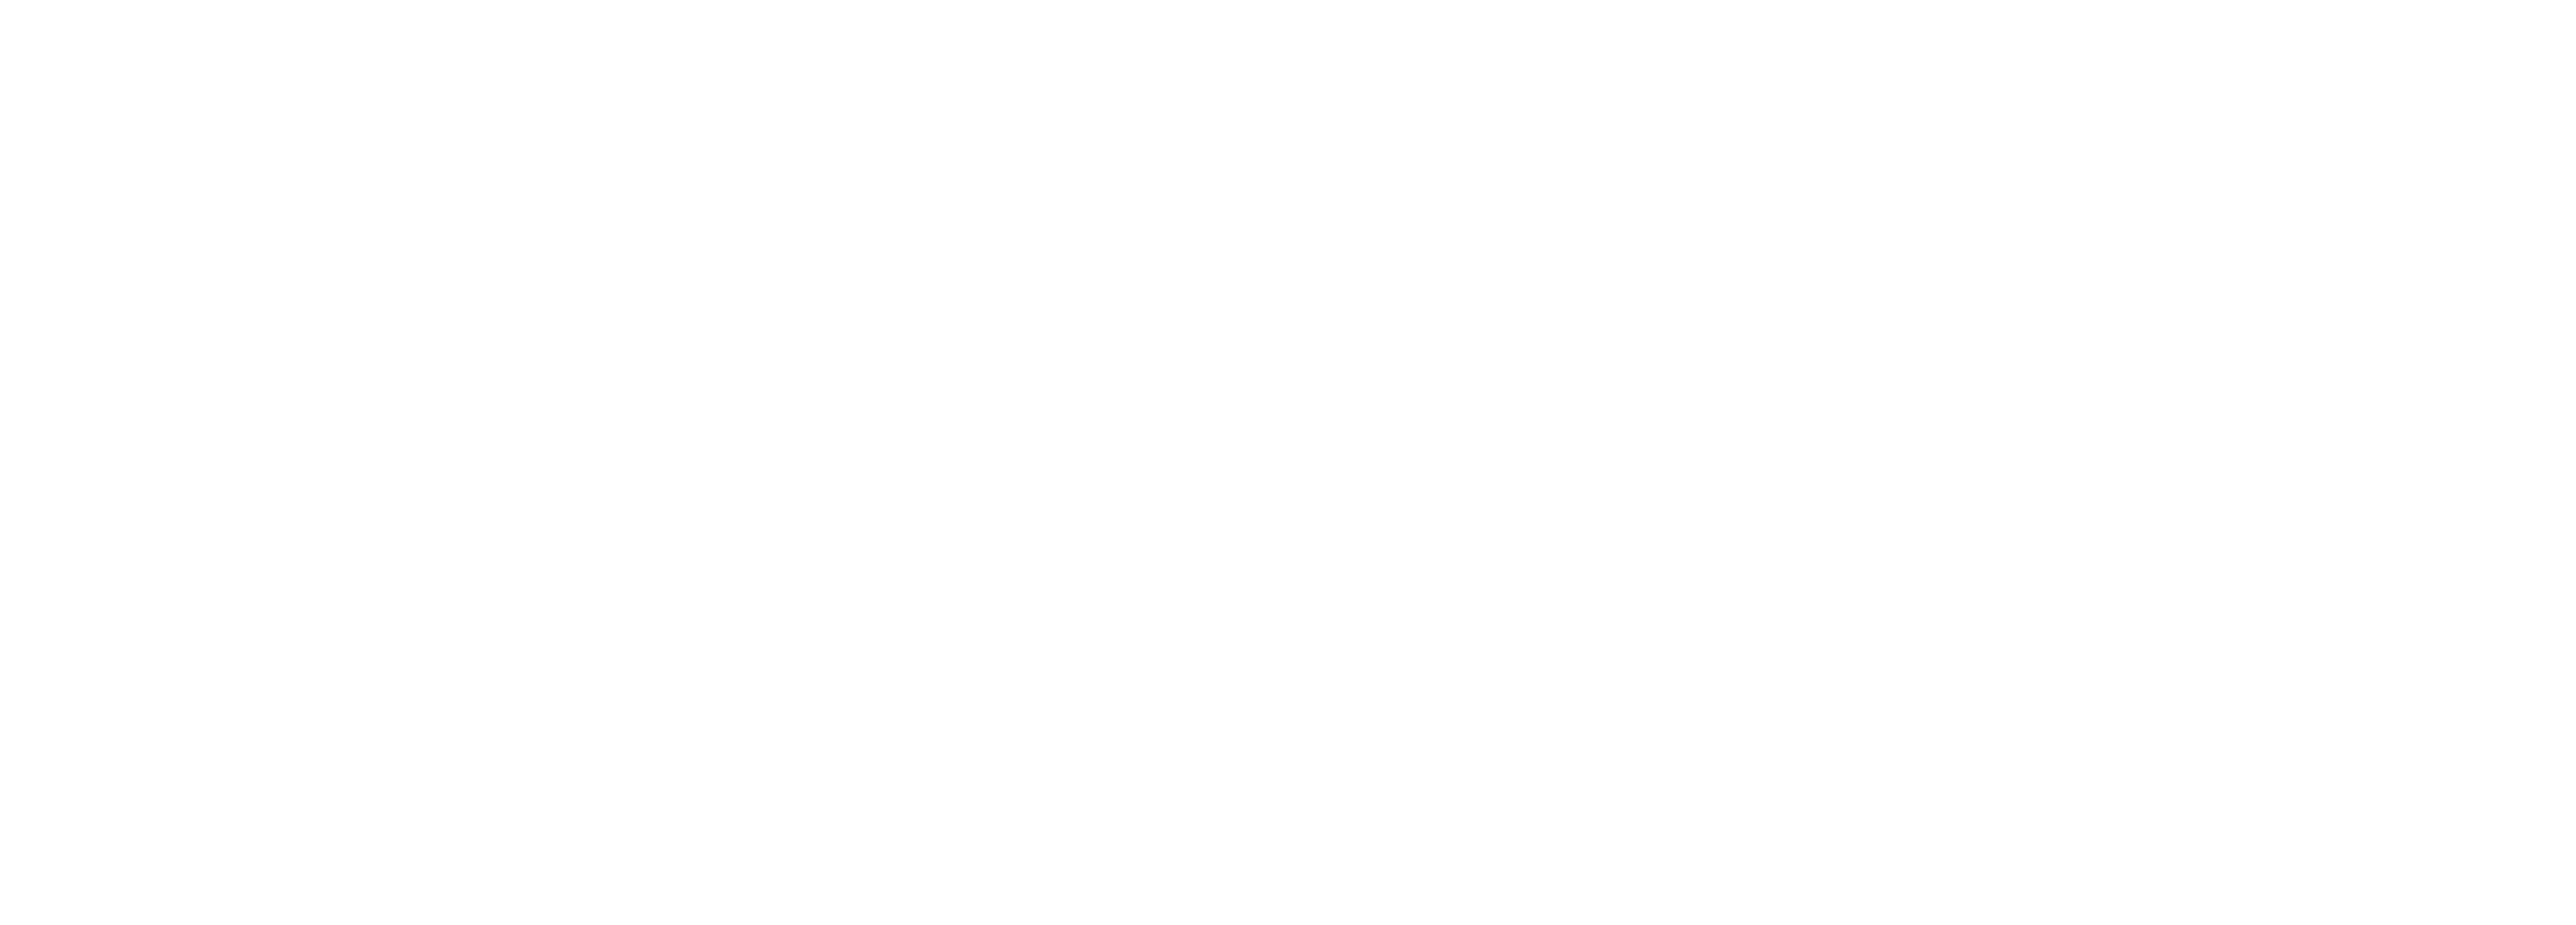 Leeds Trinity Logo